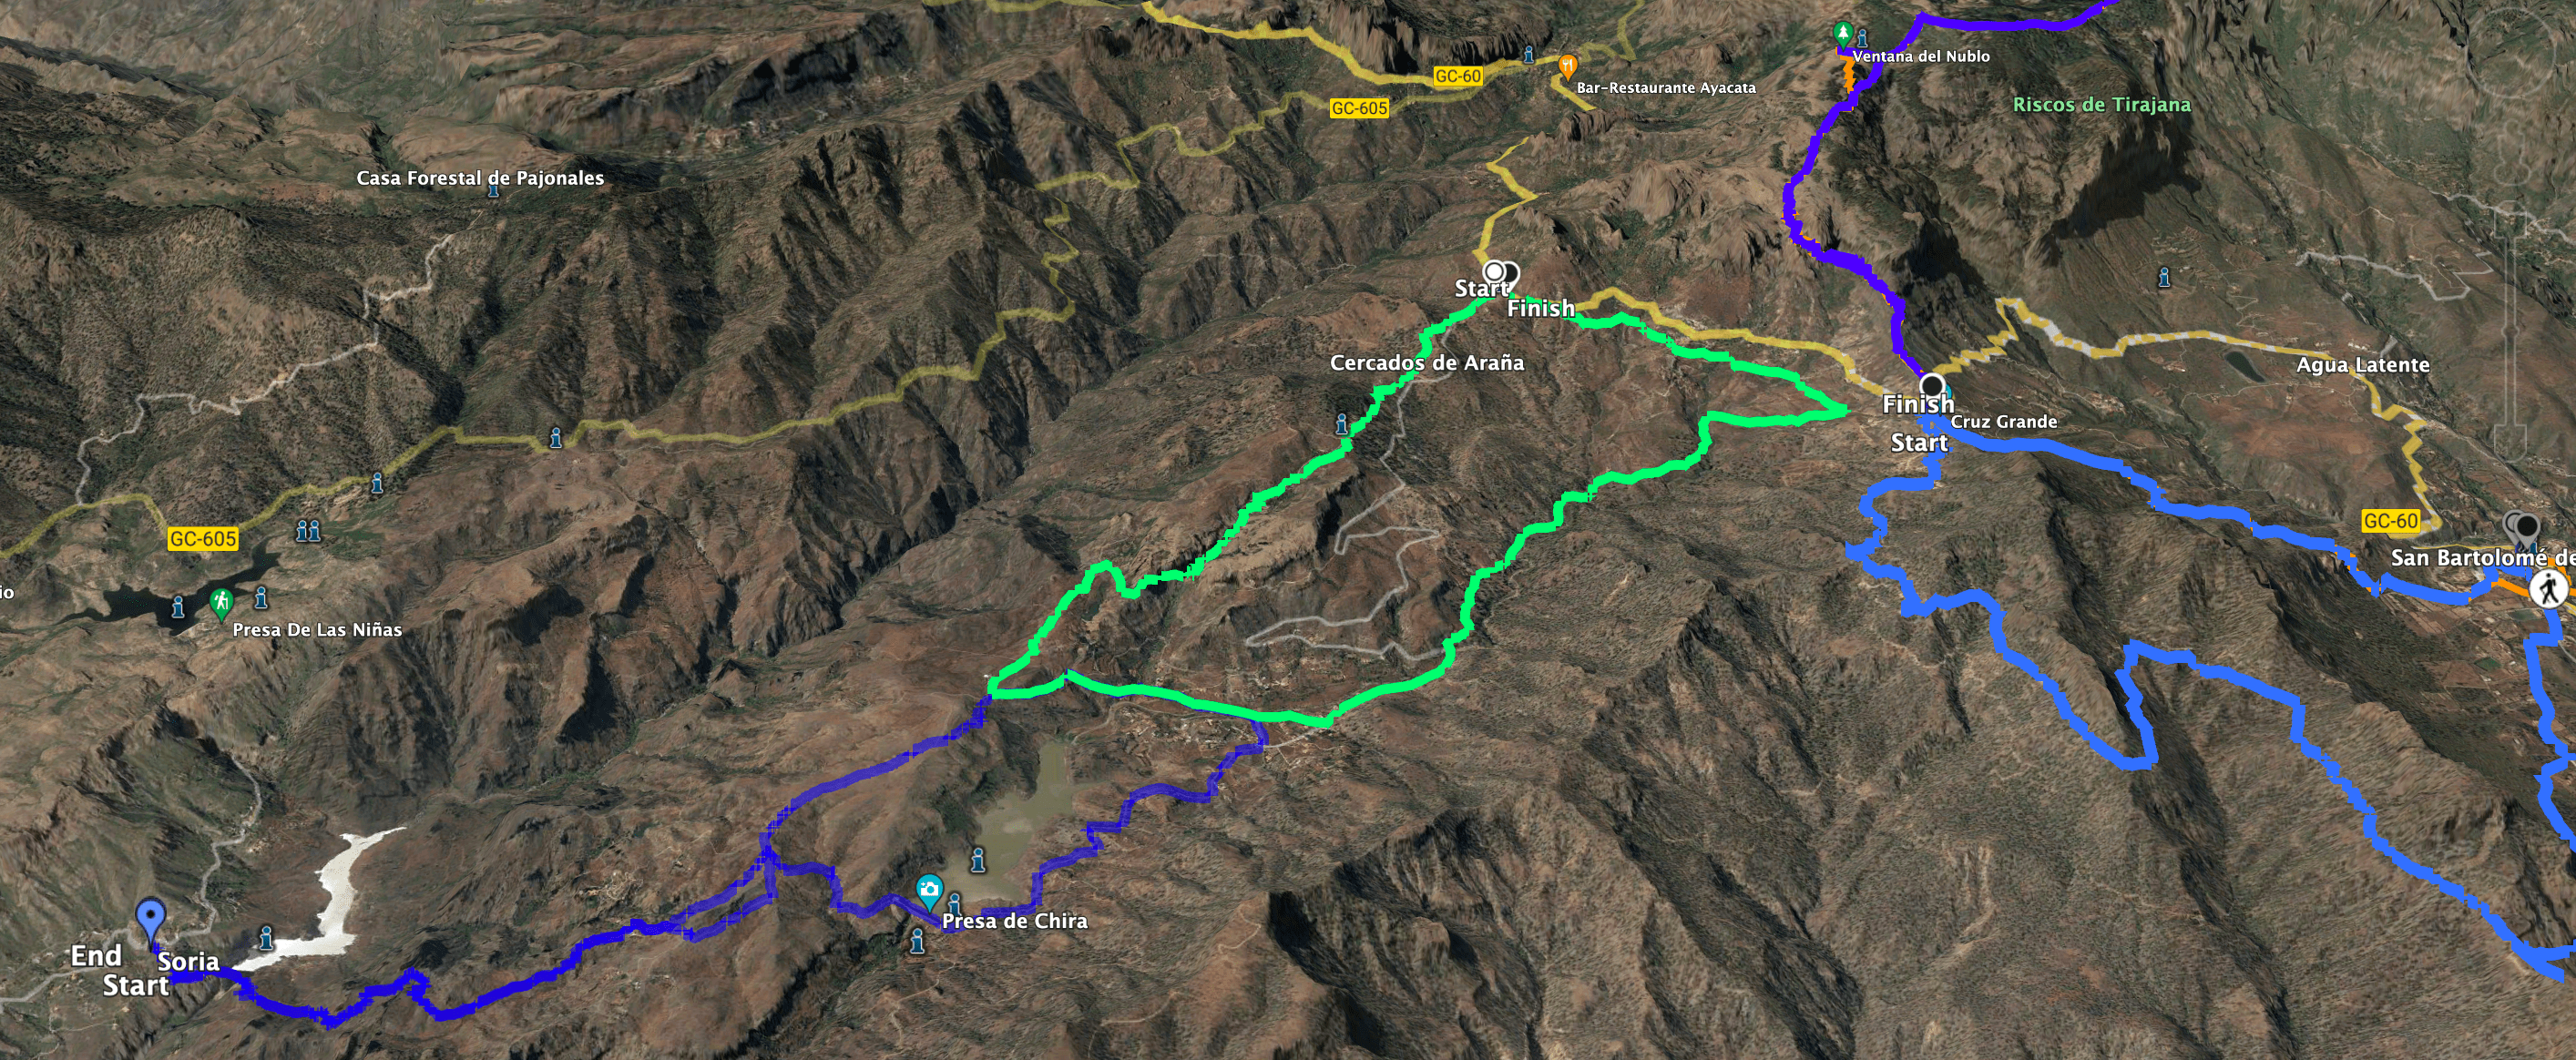 Track der Wanderung Cercados de Araña und benachbarte Tracks Presa de Chira und San Bartolomé (blau)